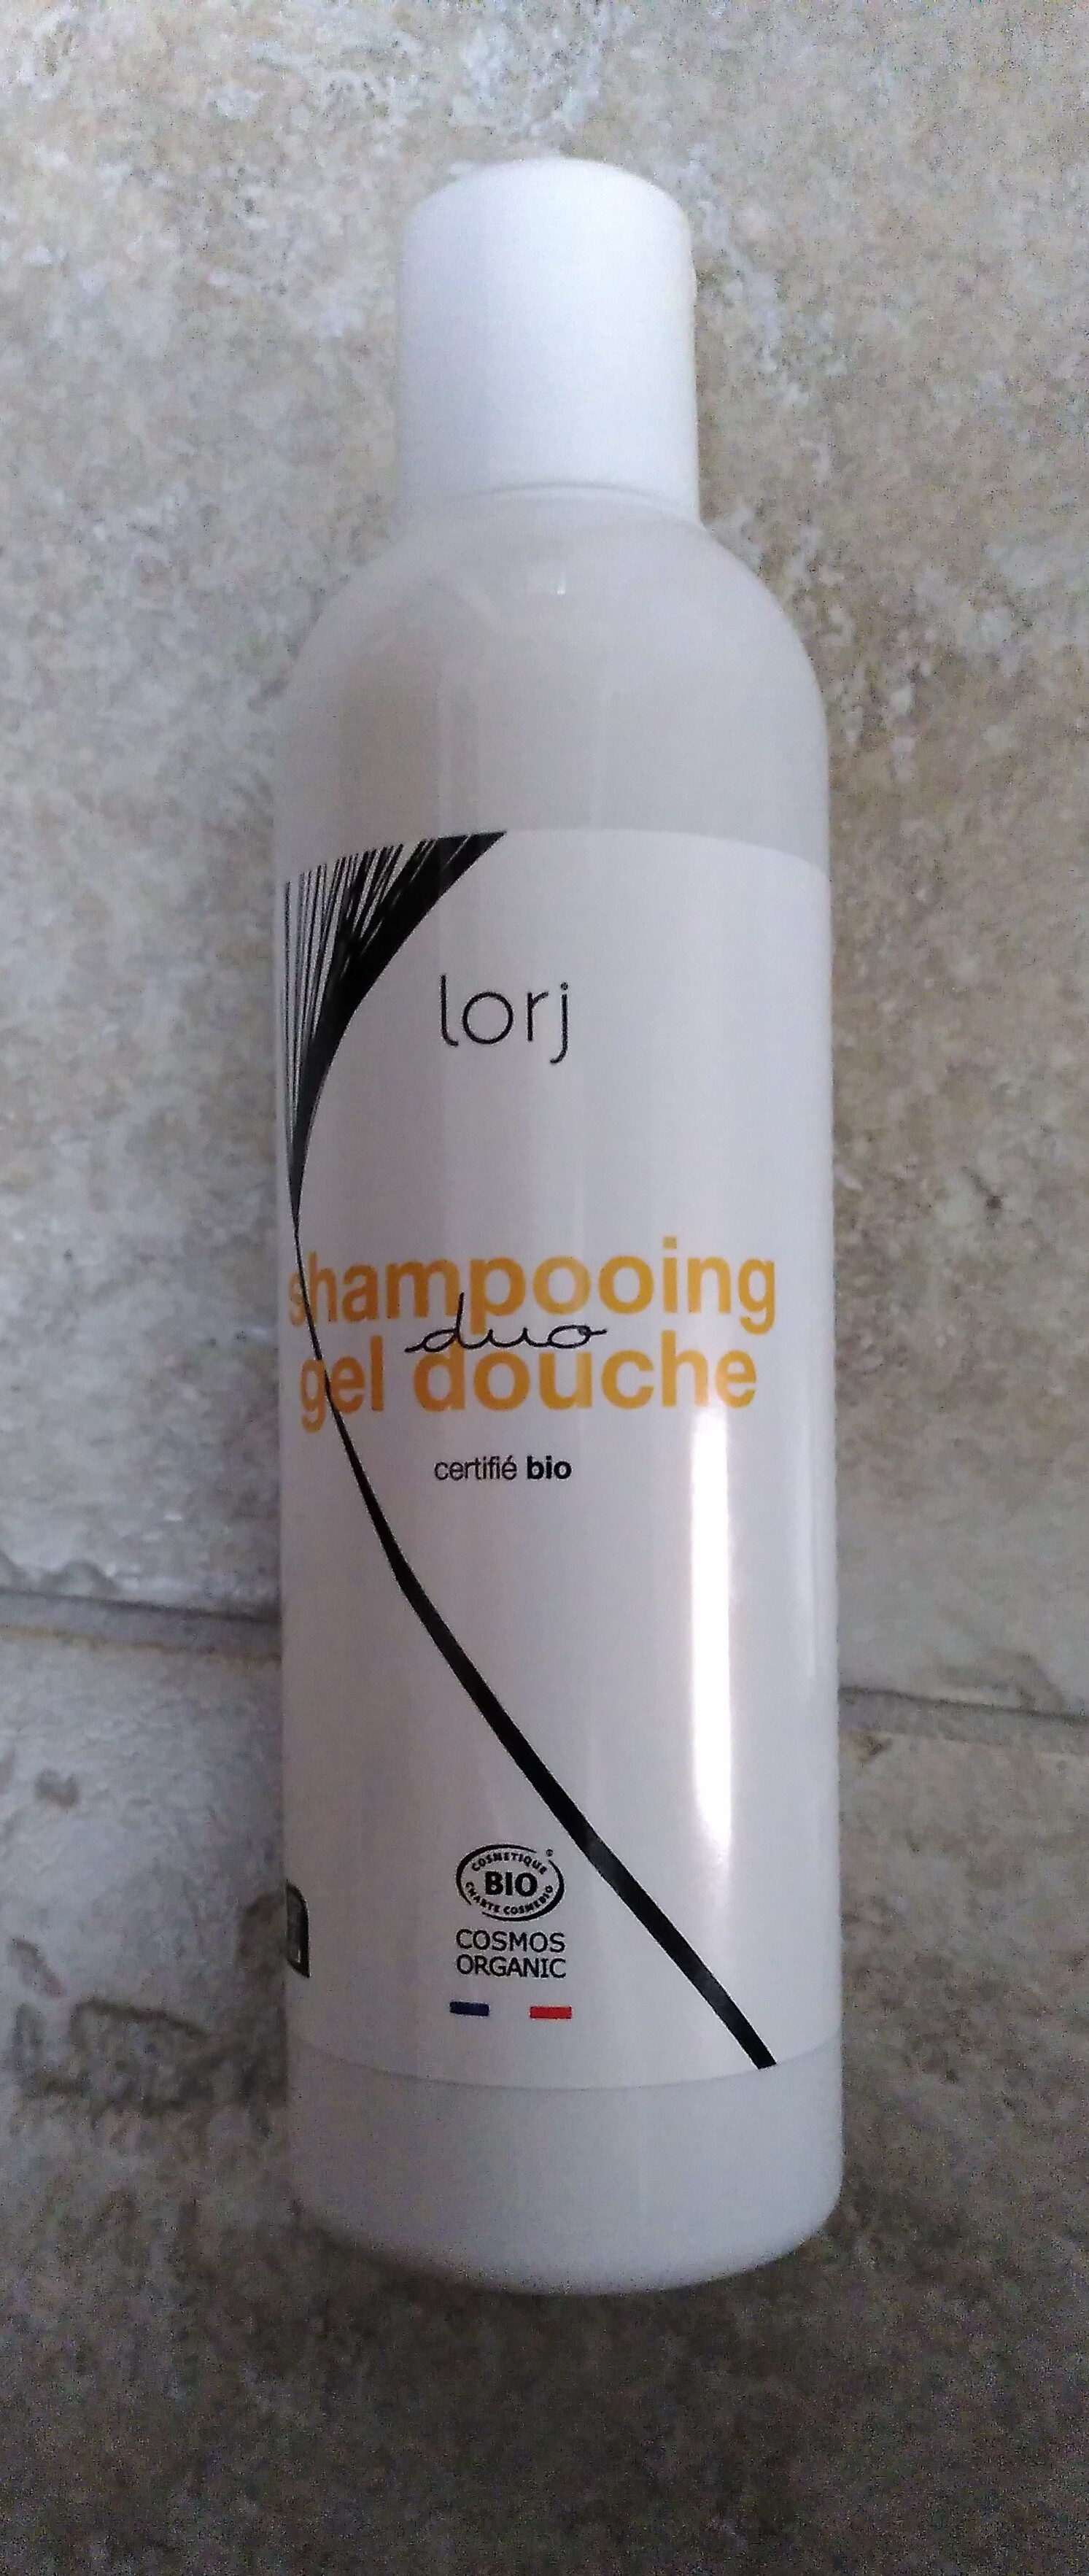 Duo shampoing gel douche - Produto - fr